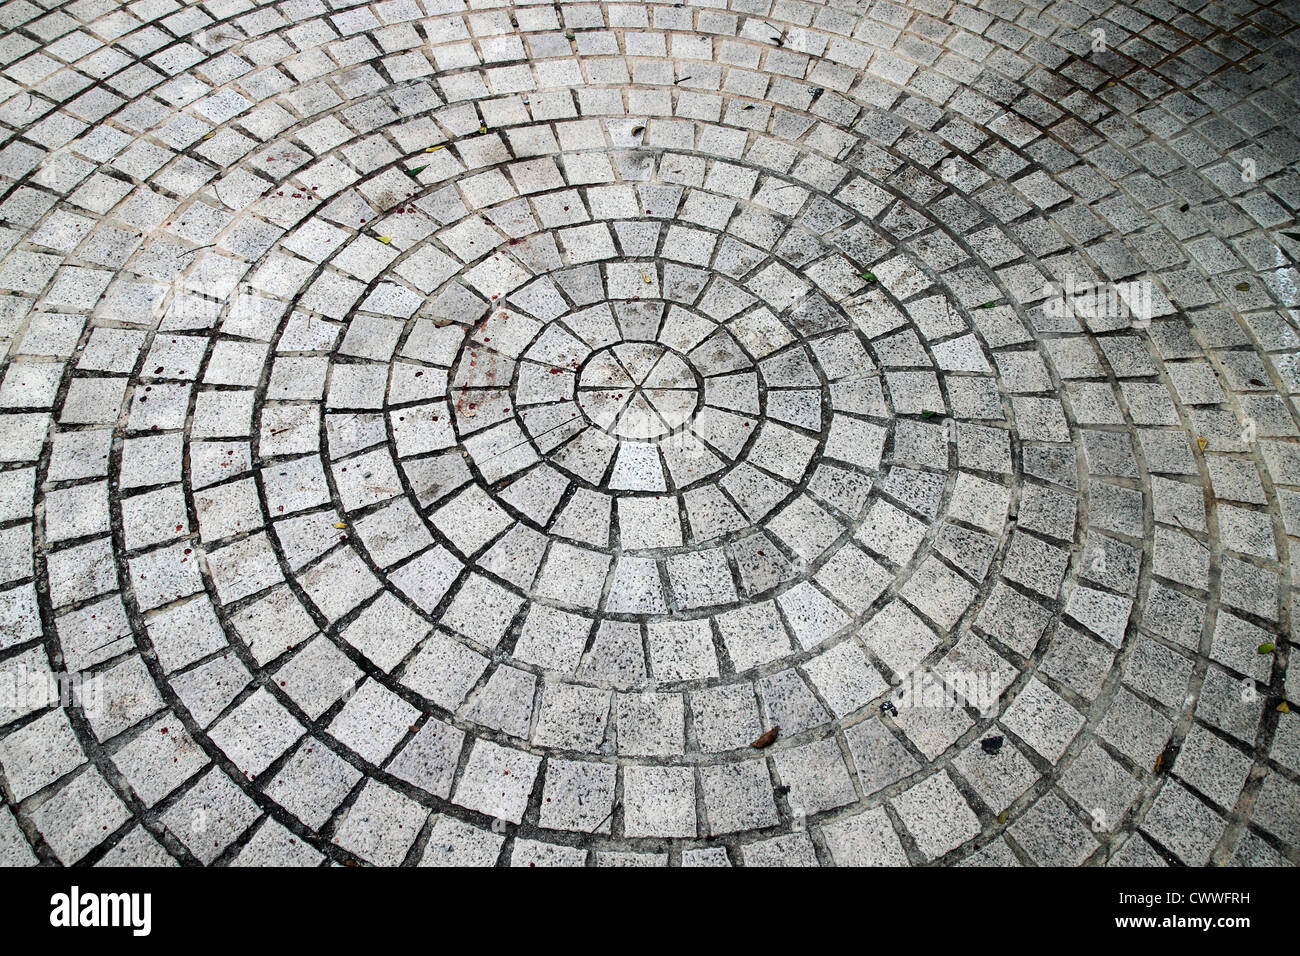 Closeup view on a cobblestone road - circle pattern - background Stock Photo